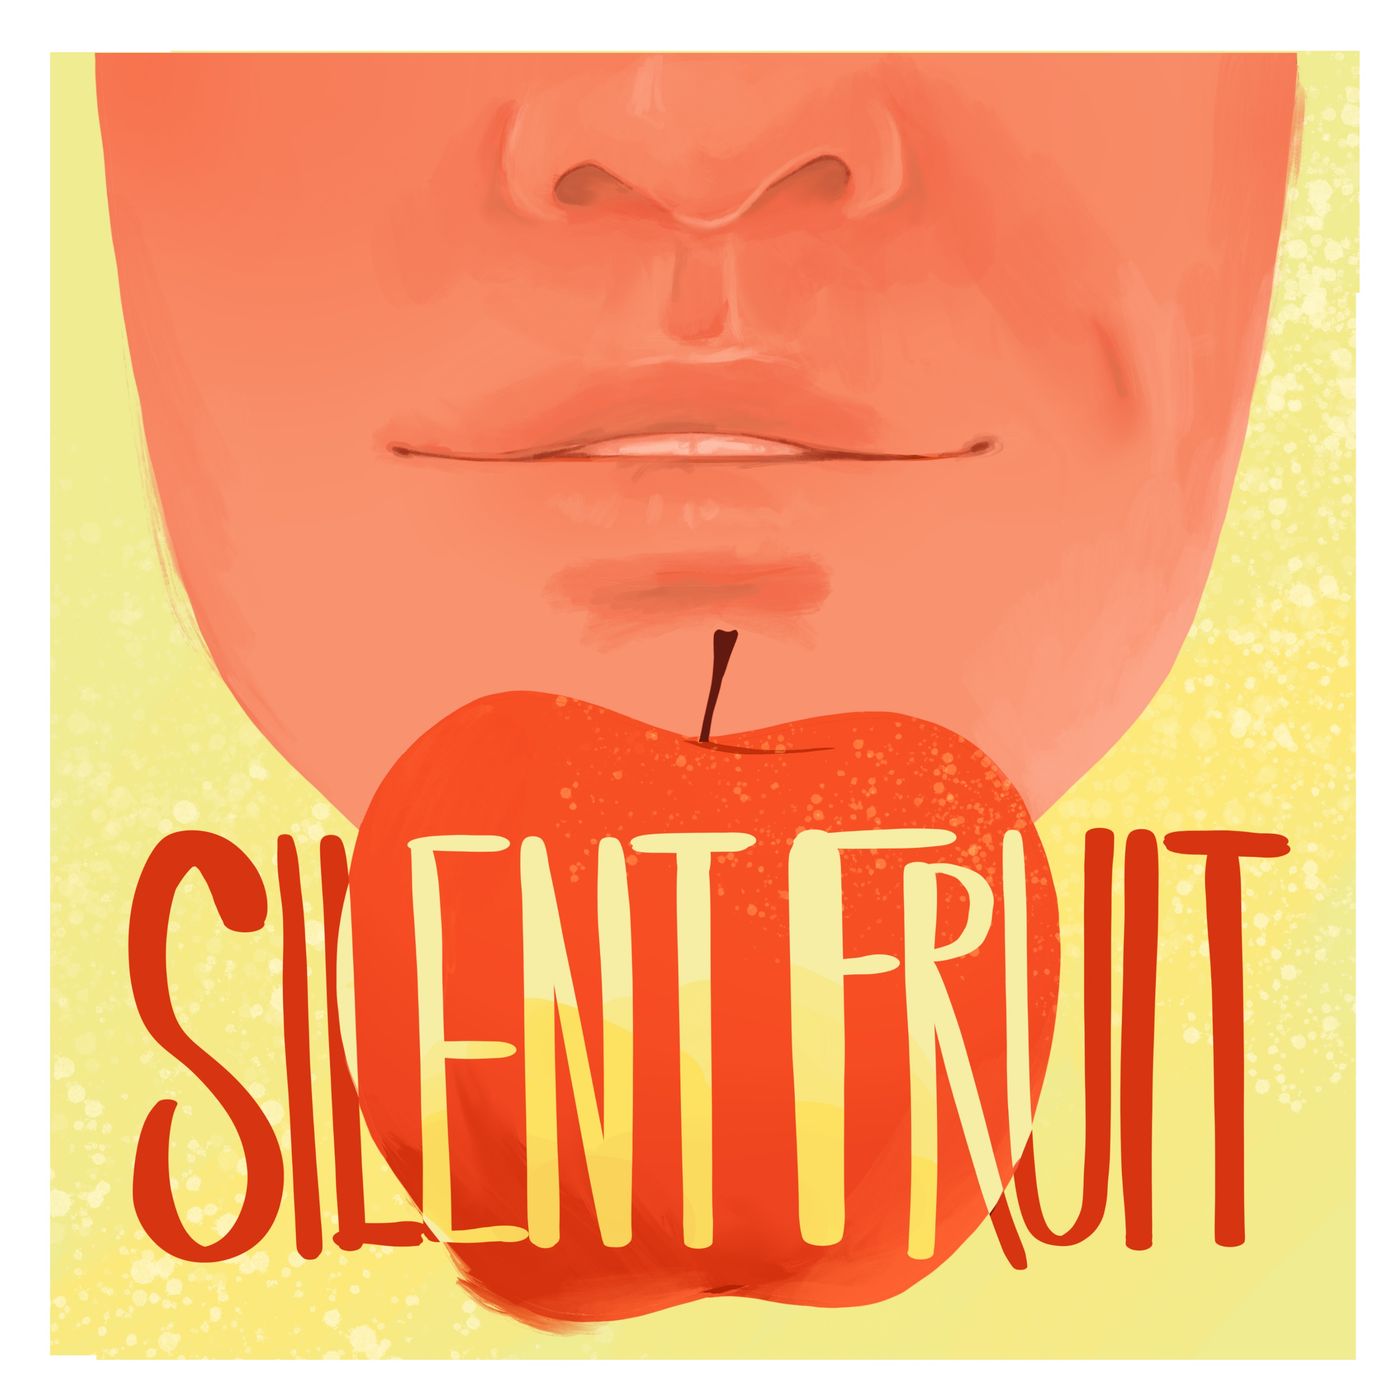 Silent Fruit